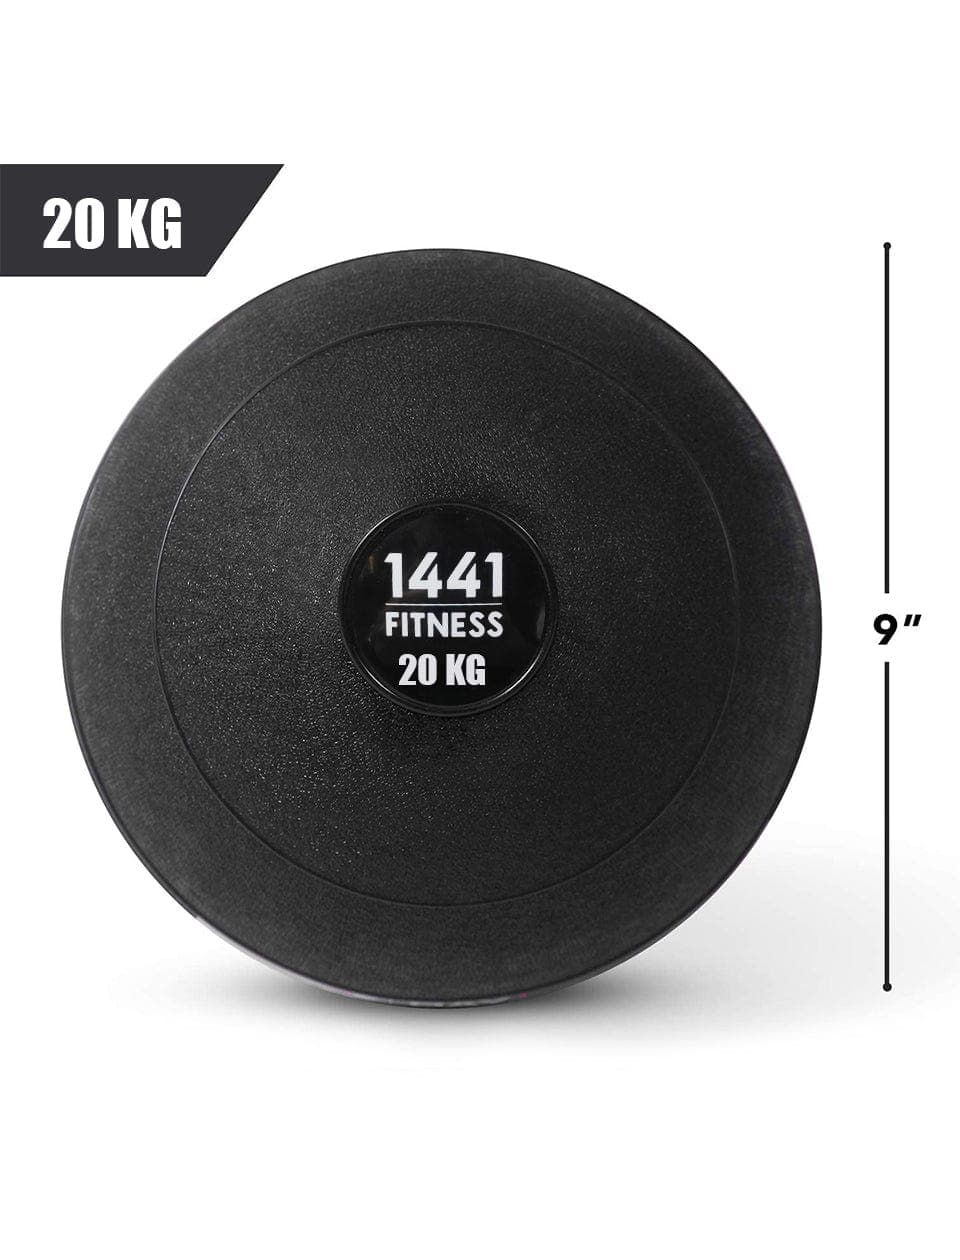 PRSAE Crossfit 20 Kg 1441 Fitness Pro Grip Slam Ball - (2 to 20 KG)